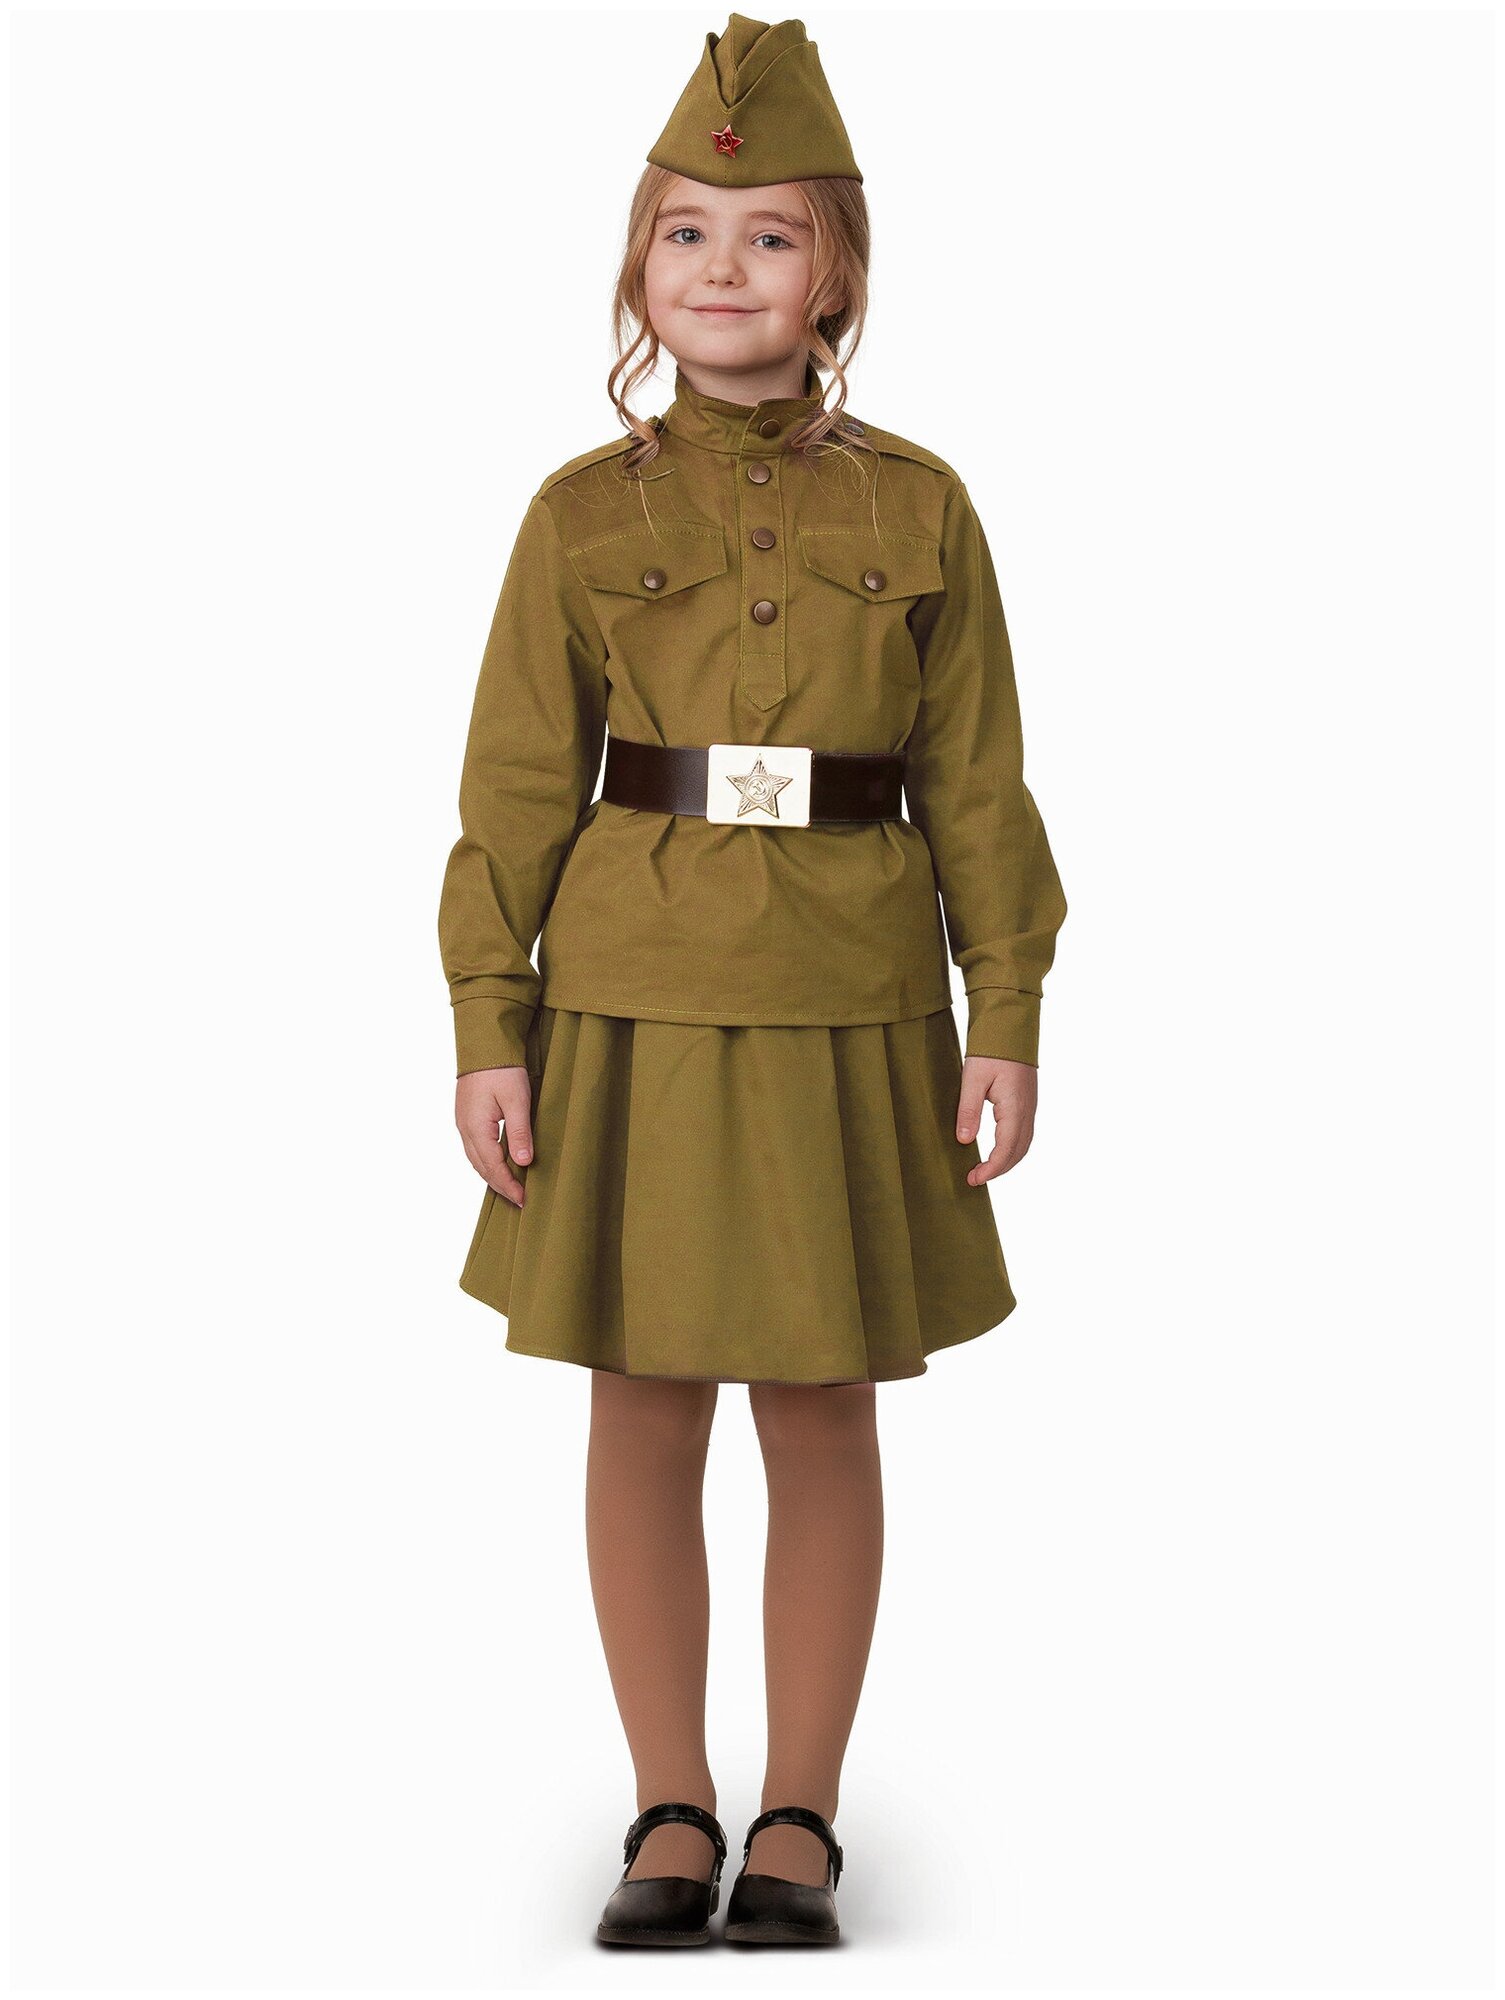 Костюм солдатка хлопок 100% (8009-3), размер 146, цвет мультиколор, бренд Батик